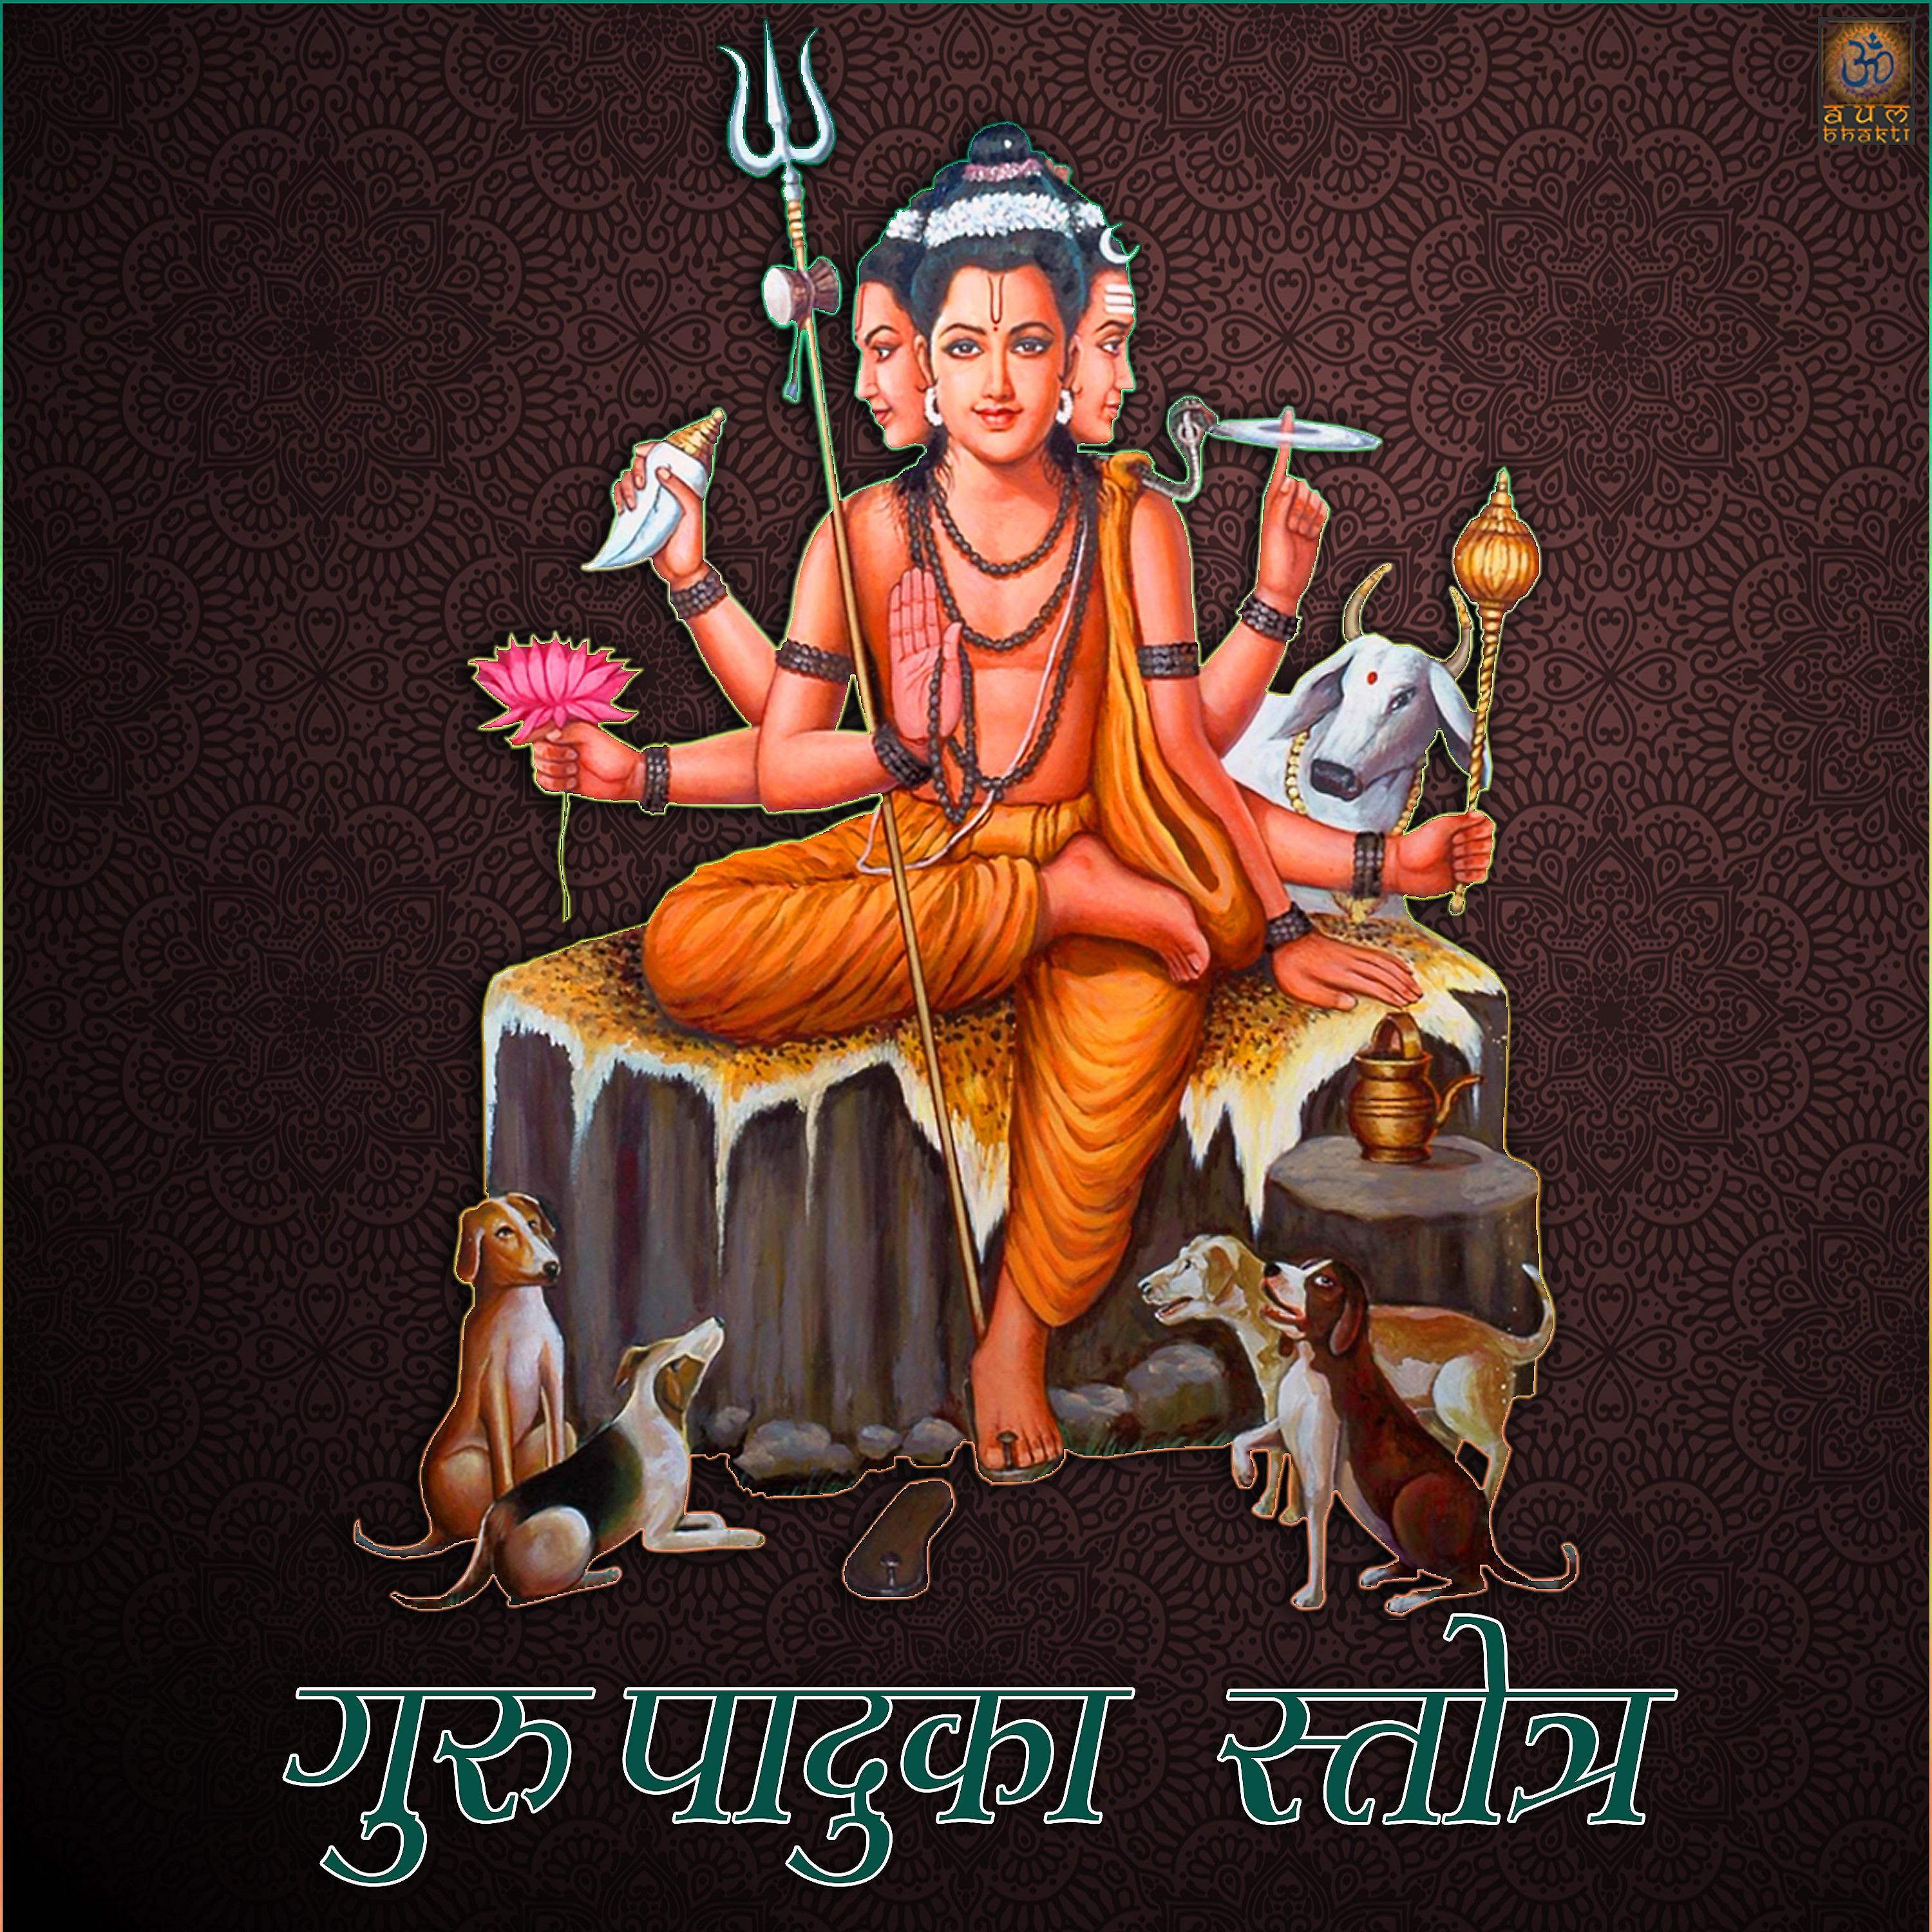 Постер альбома Guru Paduka Stotram